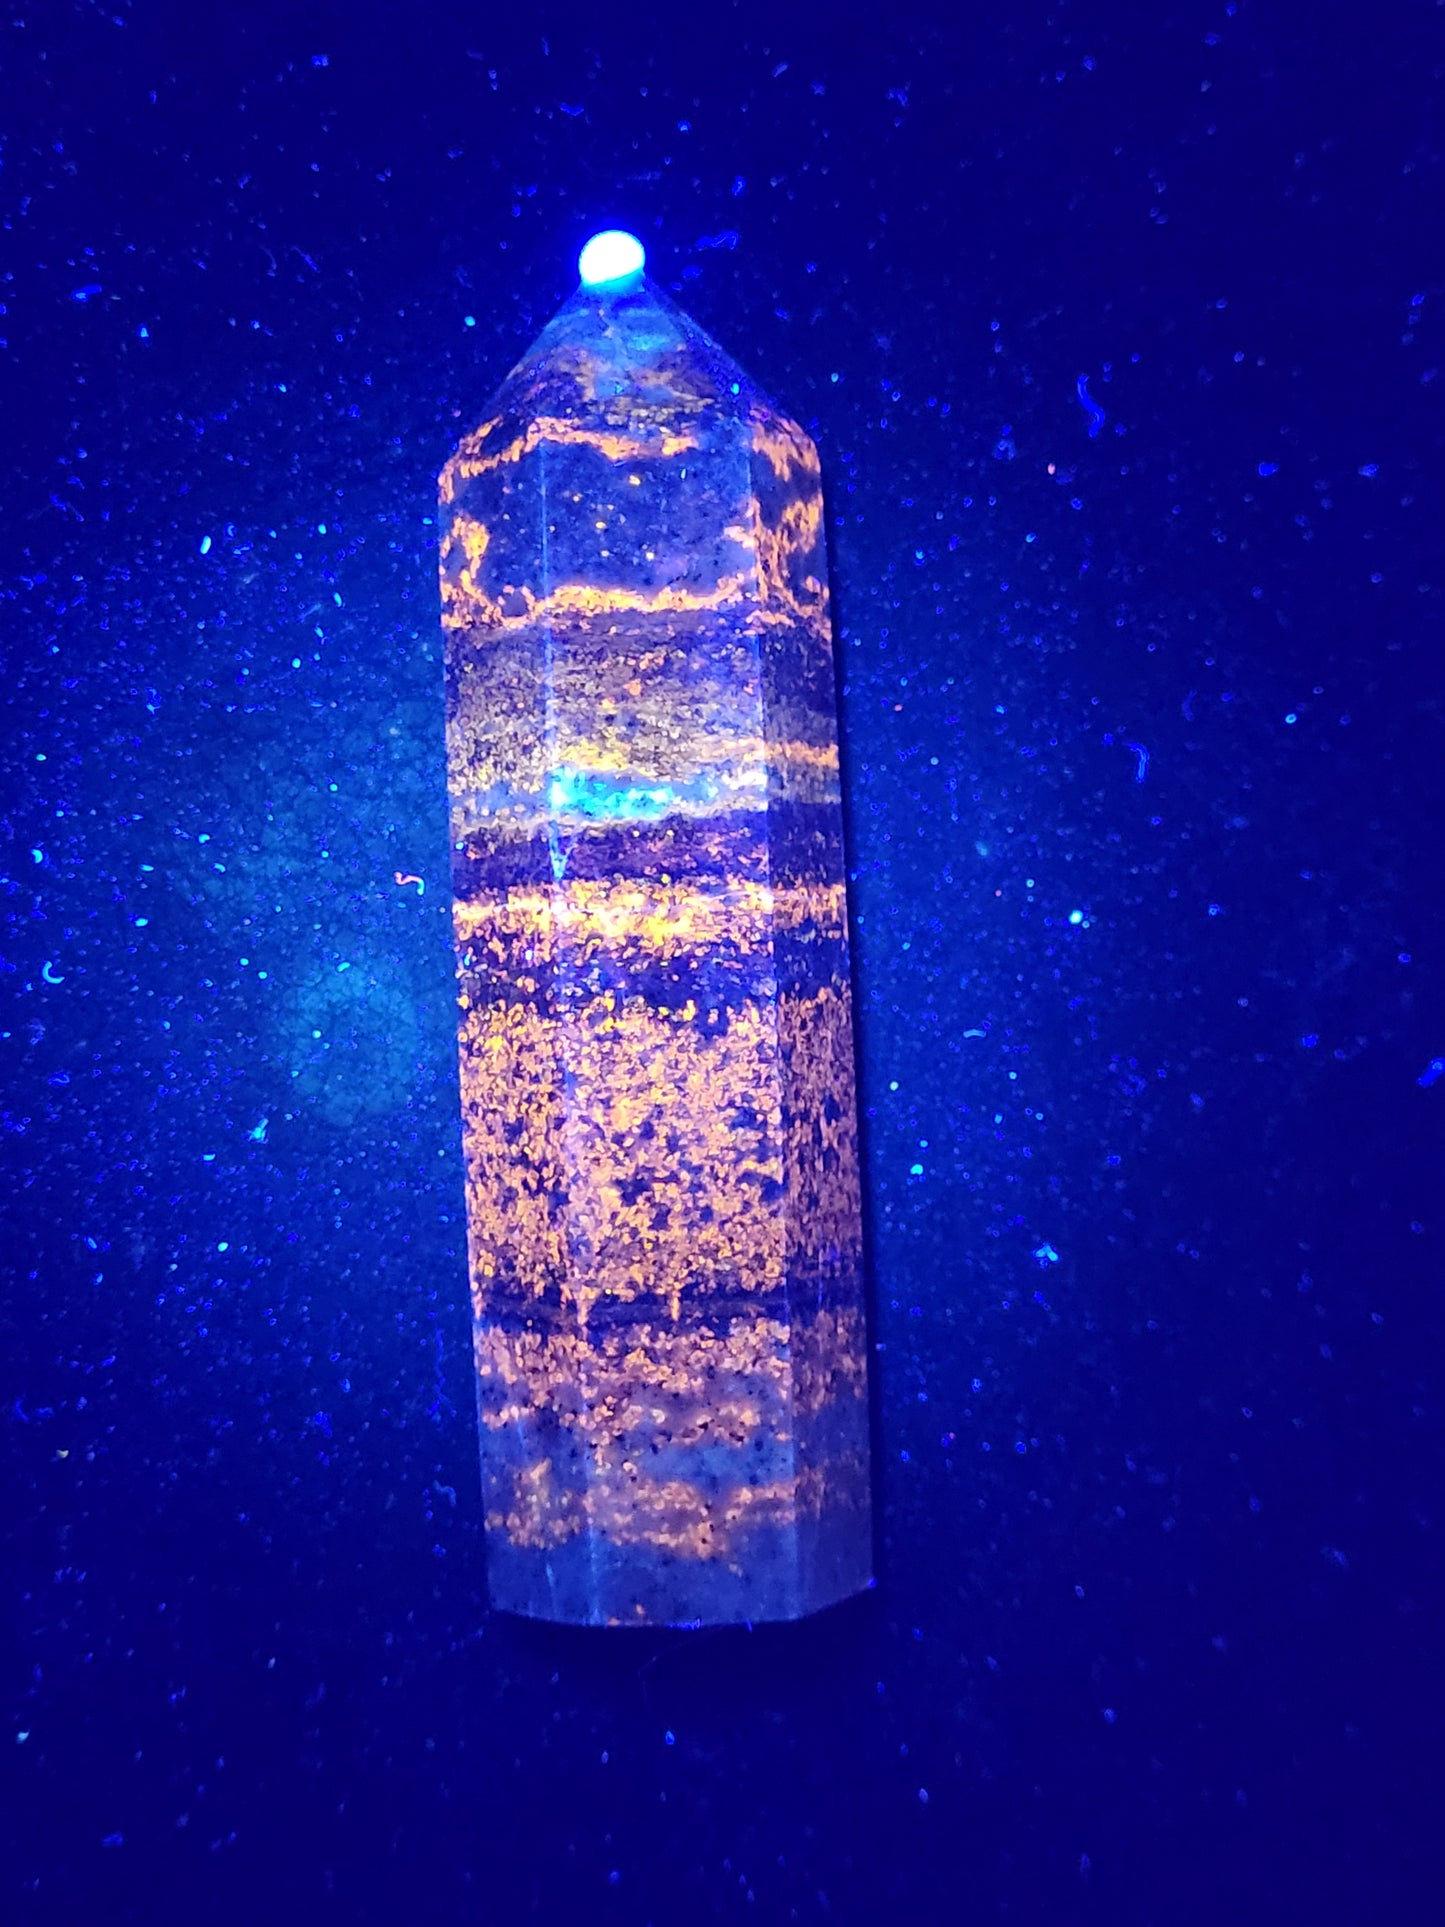 Lapis Lazuli tower